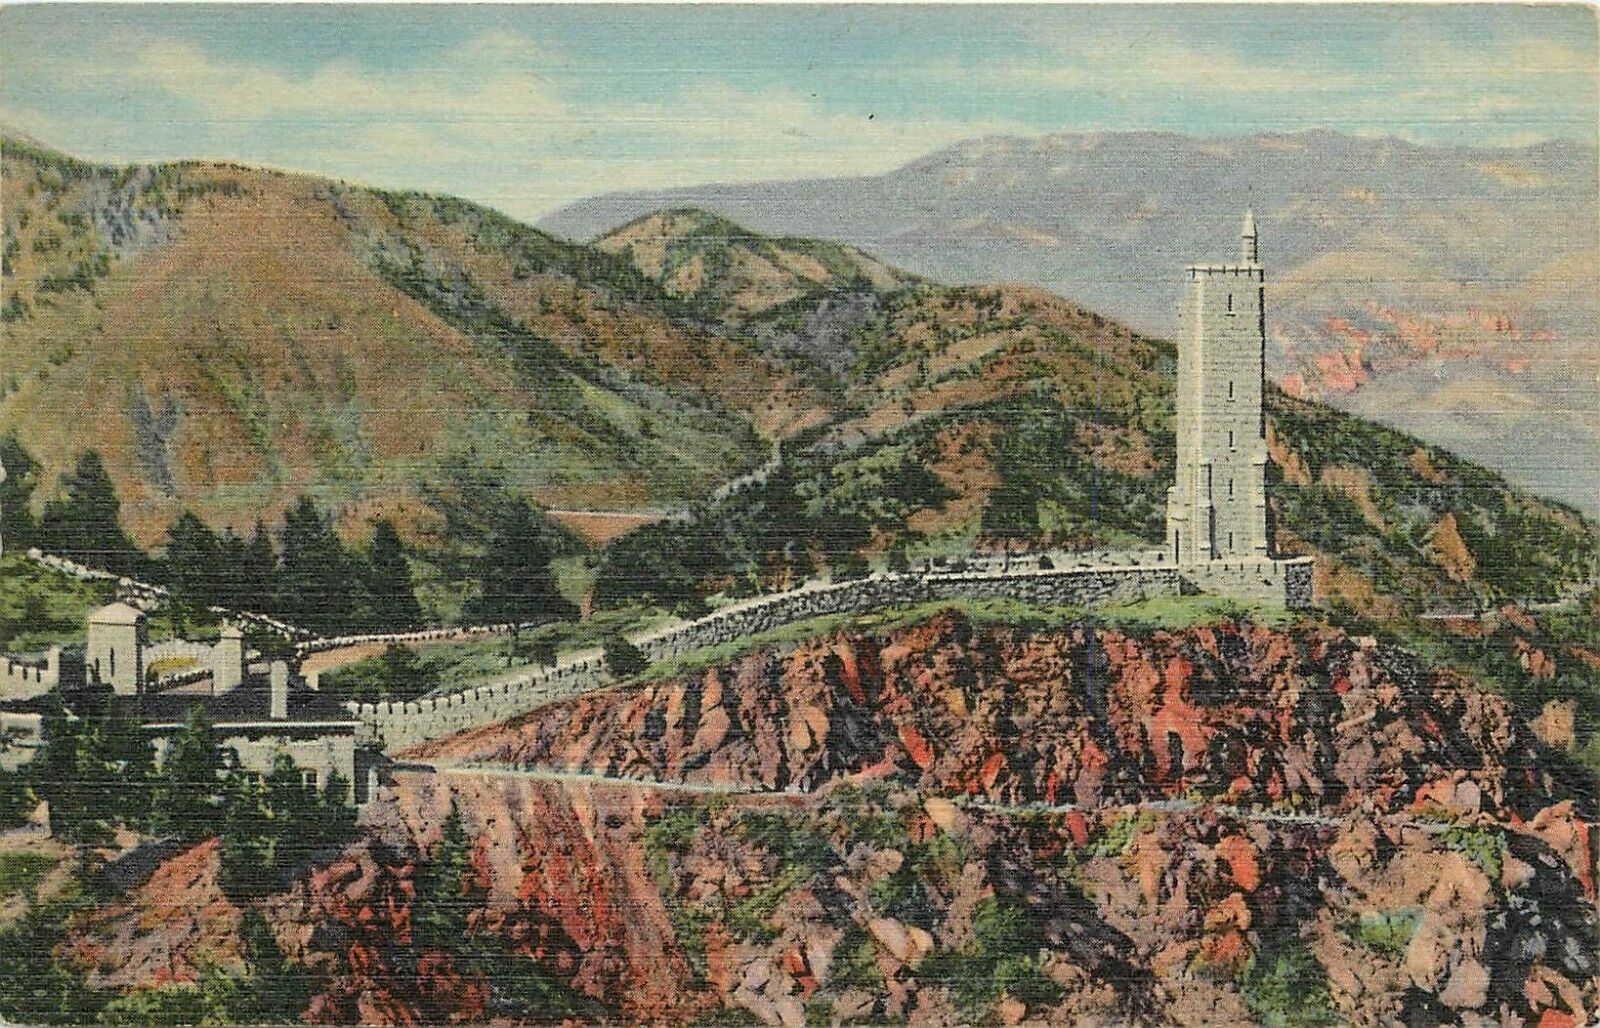 Will Rogers Shrine of the Sun Cheyenne Mtn Pikes Peak Colorado pm 1946 Postcard